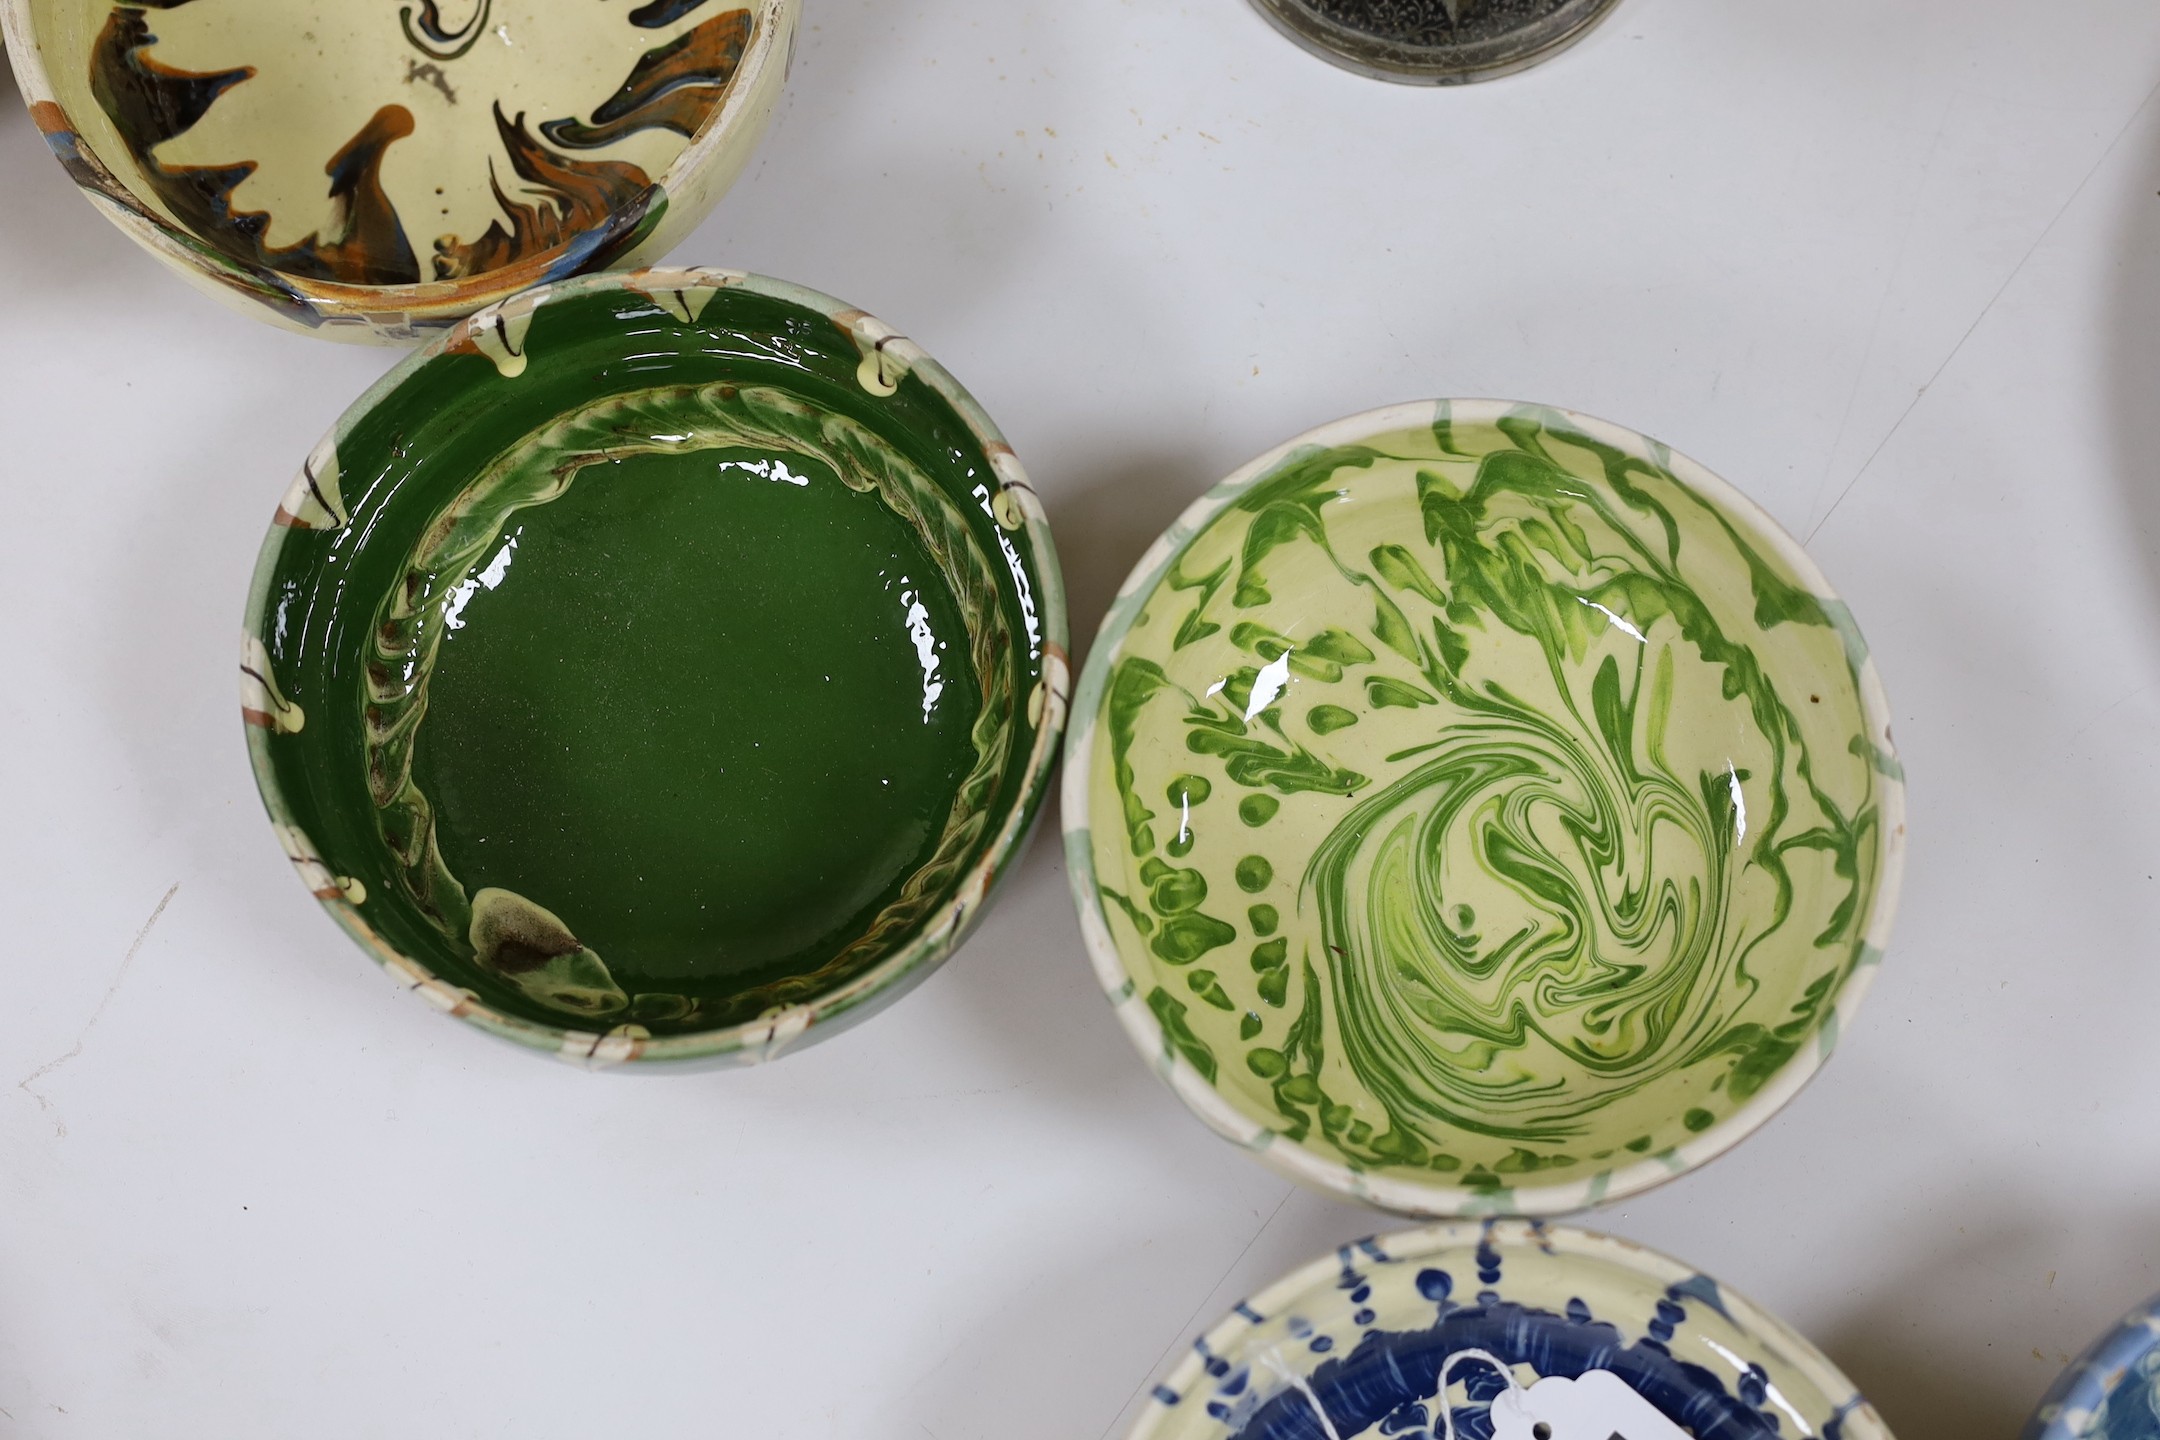 Six Continental pottery sponge ware bowls, 16cm diameter